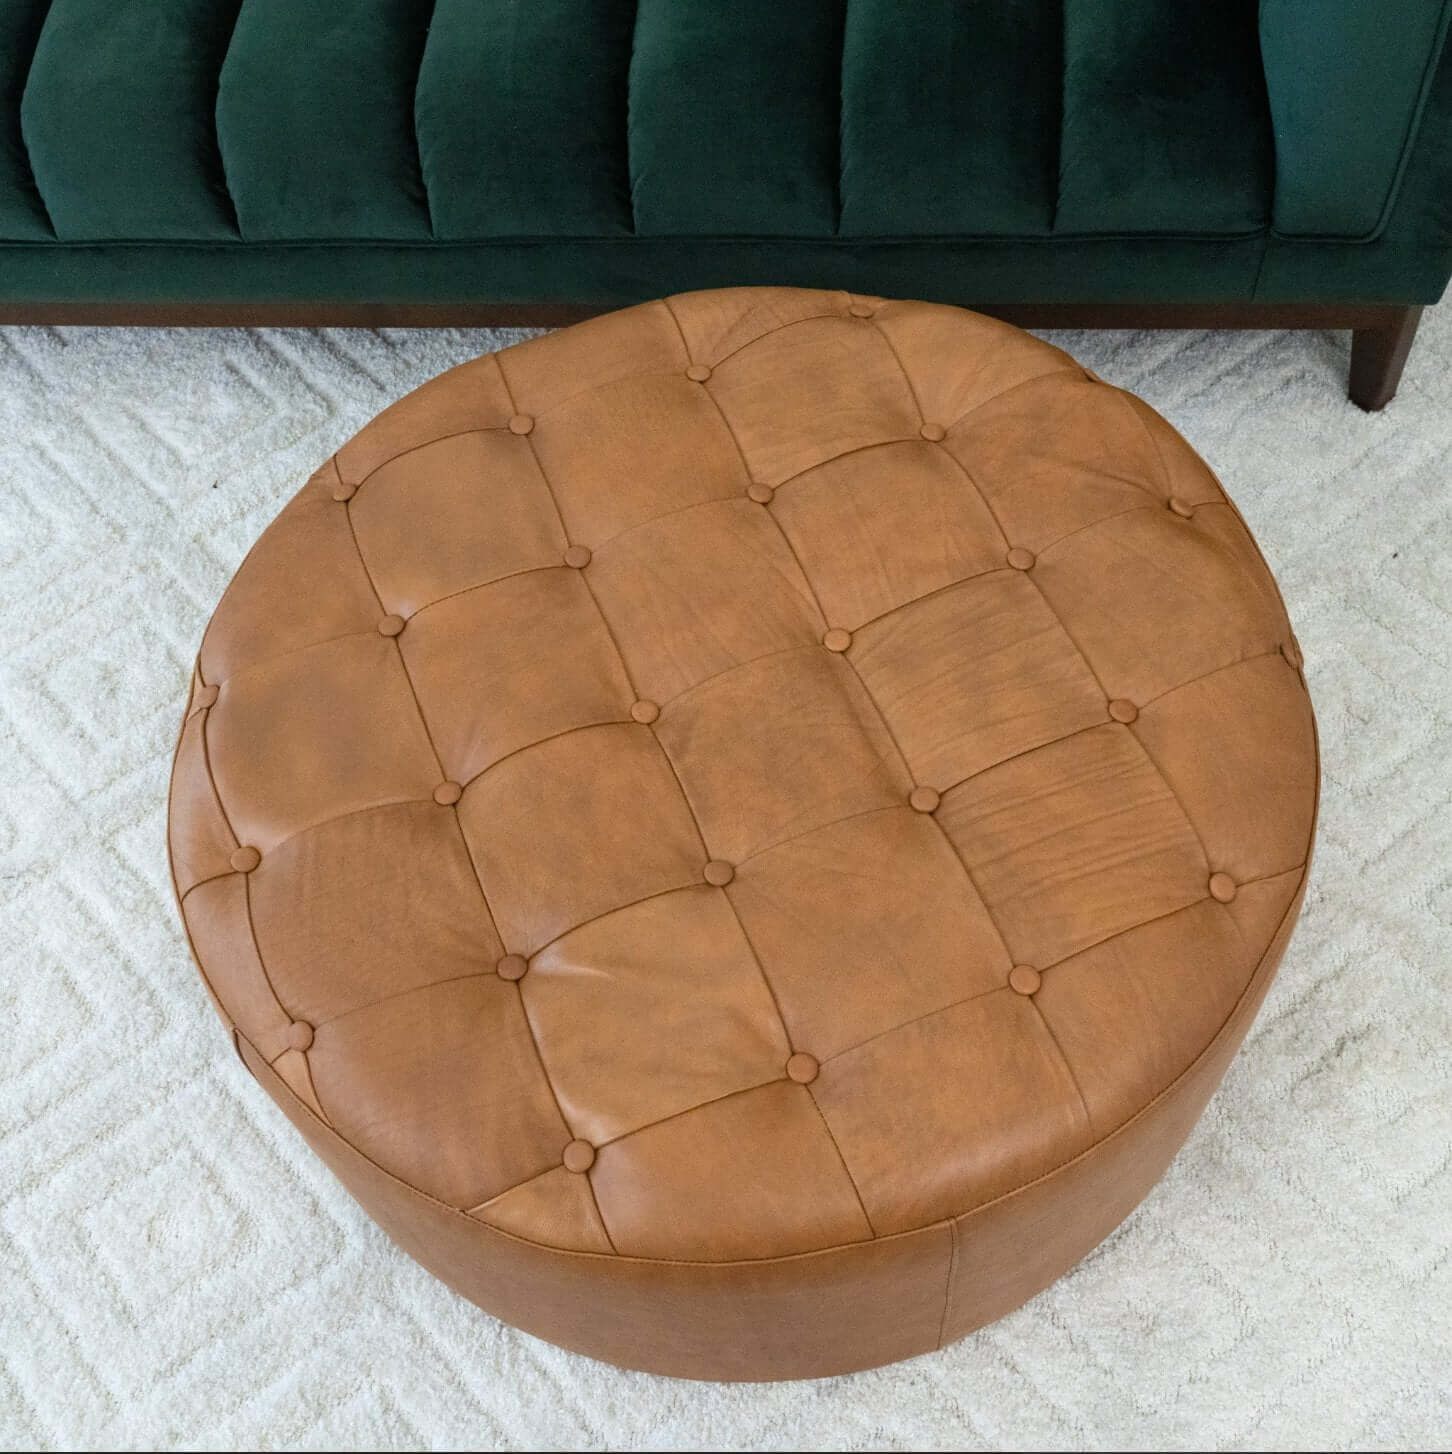 Seletar MCM Style Tufted Tan Leather Ottoman - Revel Sofa 